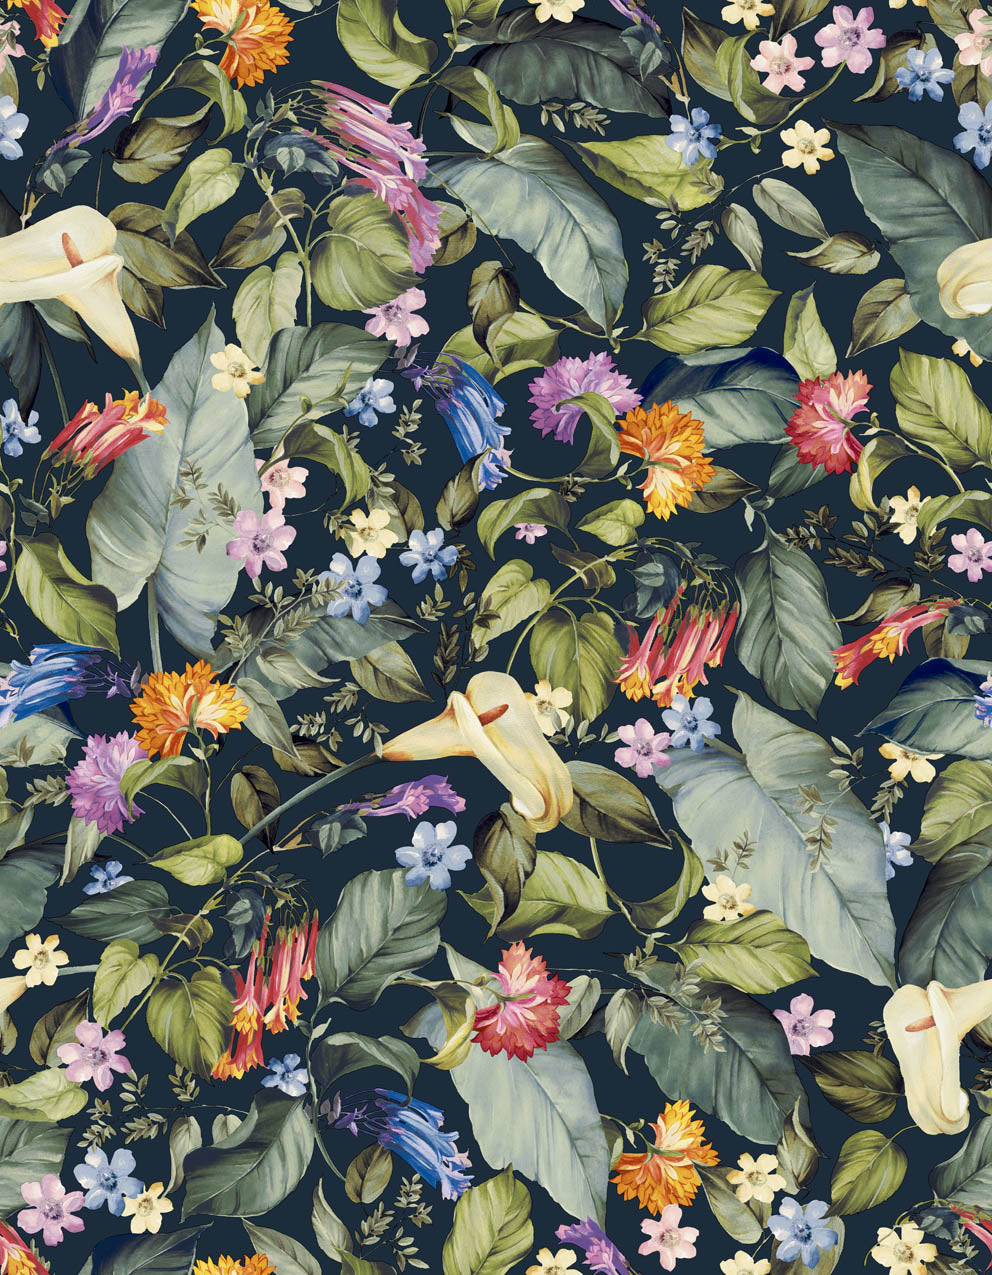 Botanical Floral wallpaper